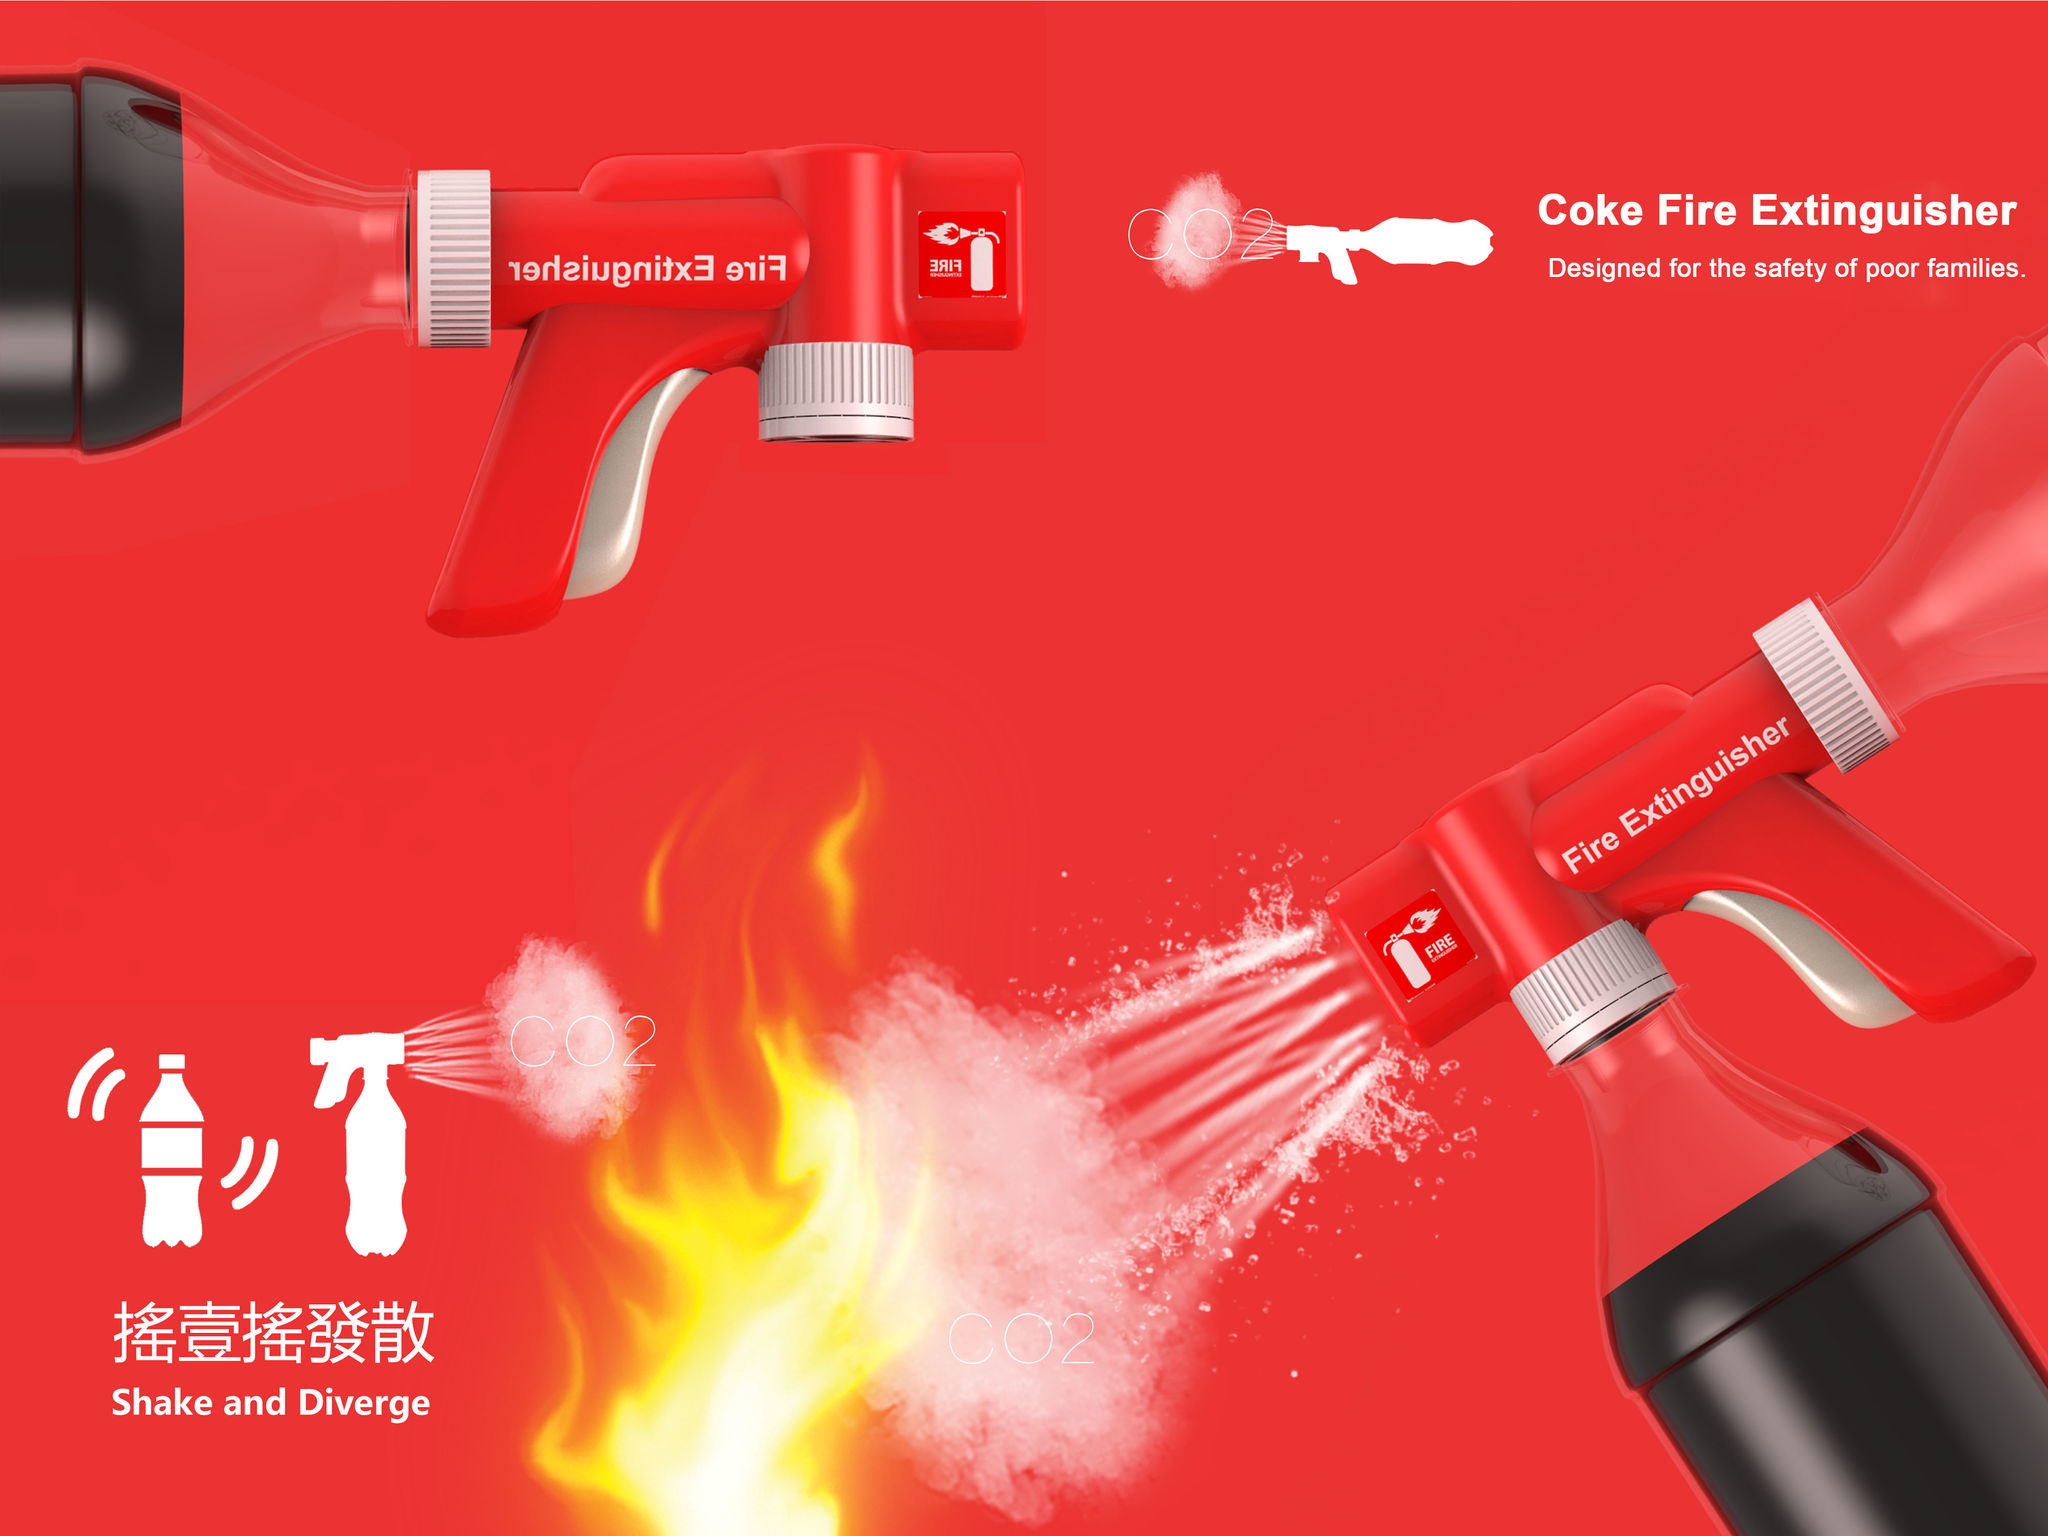 Coke Fire Extinguisher